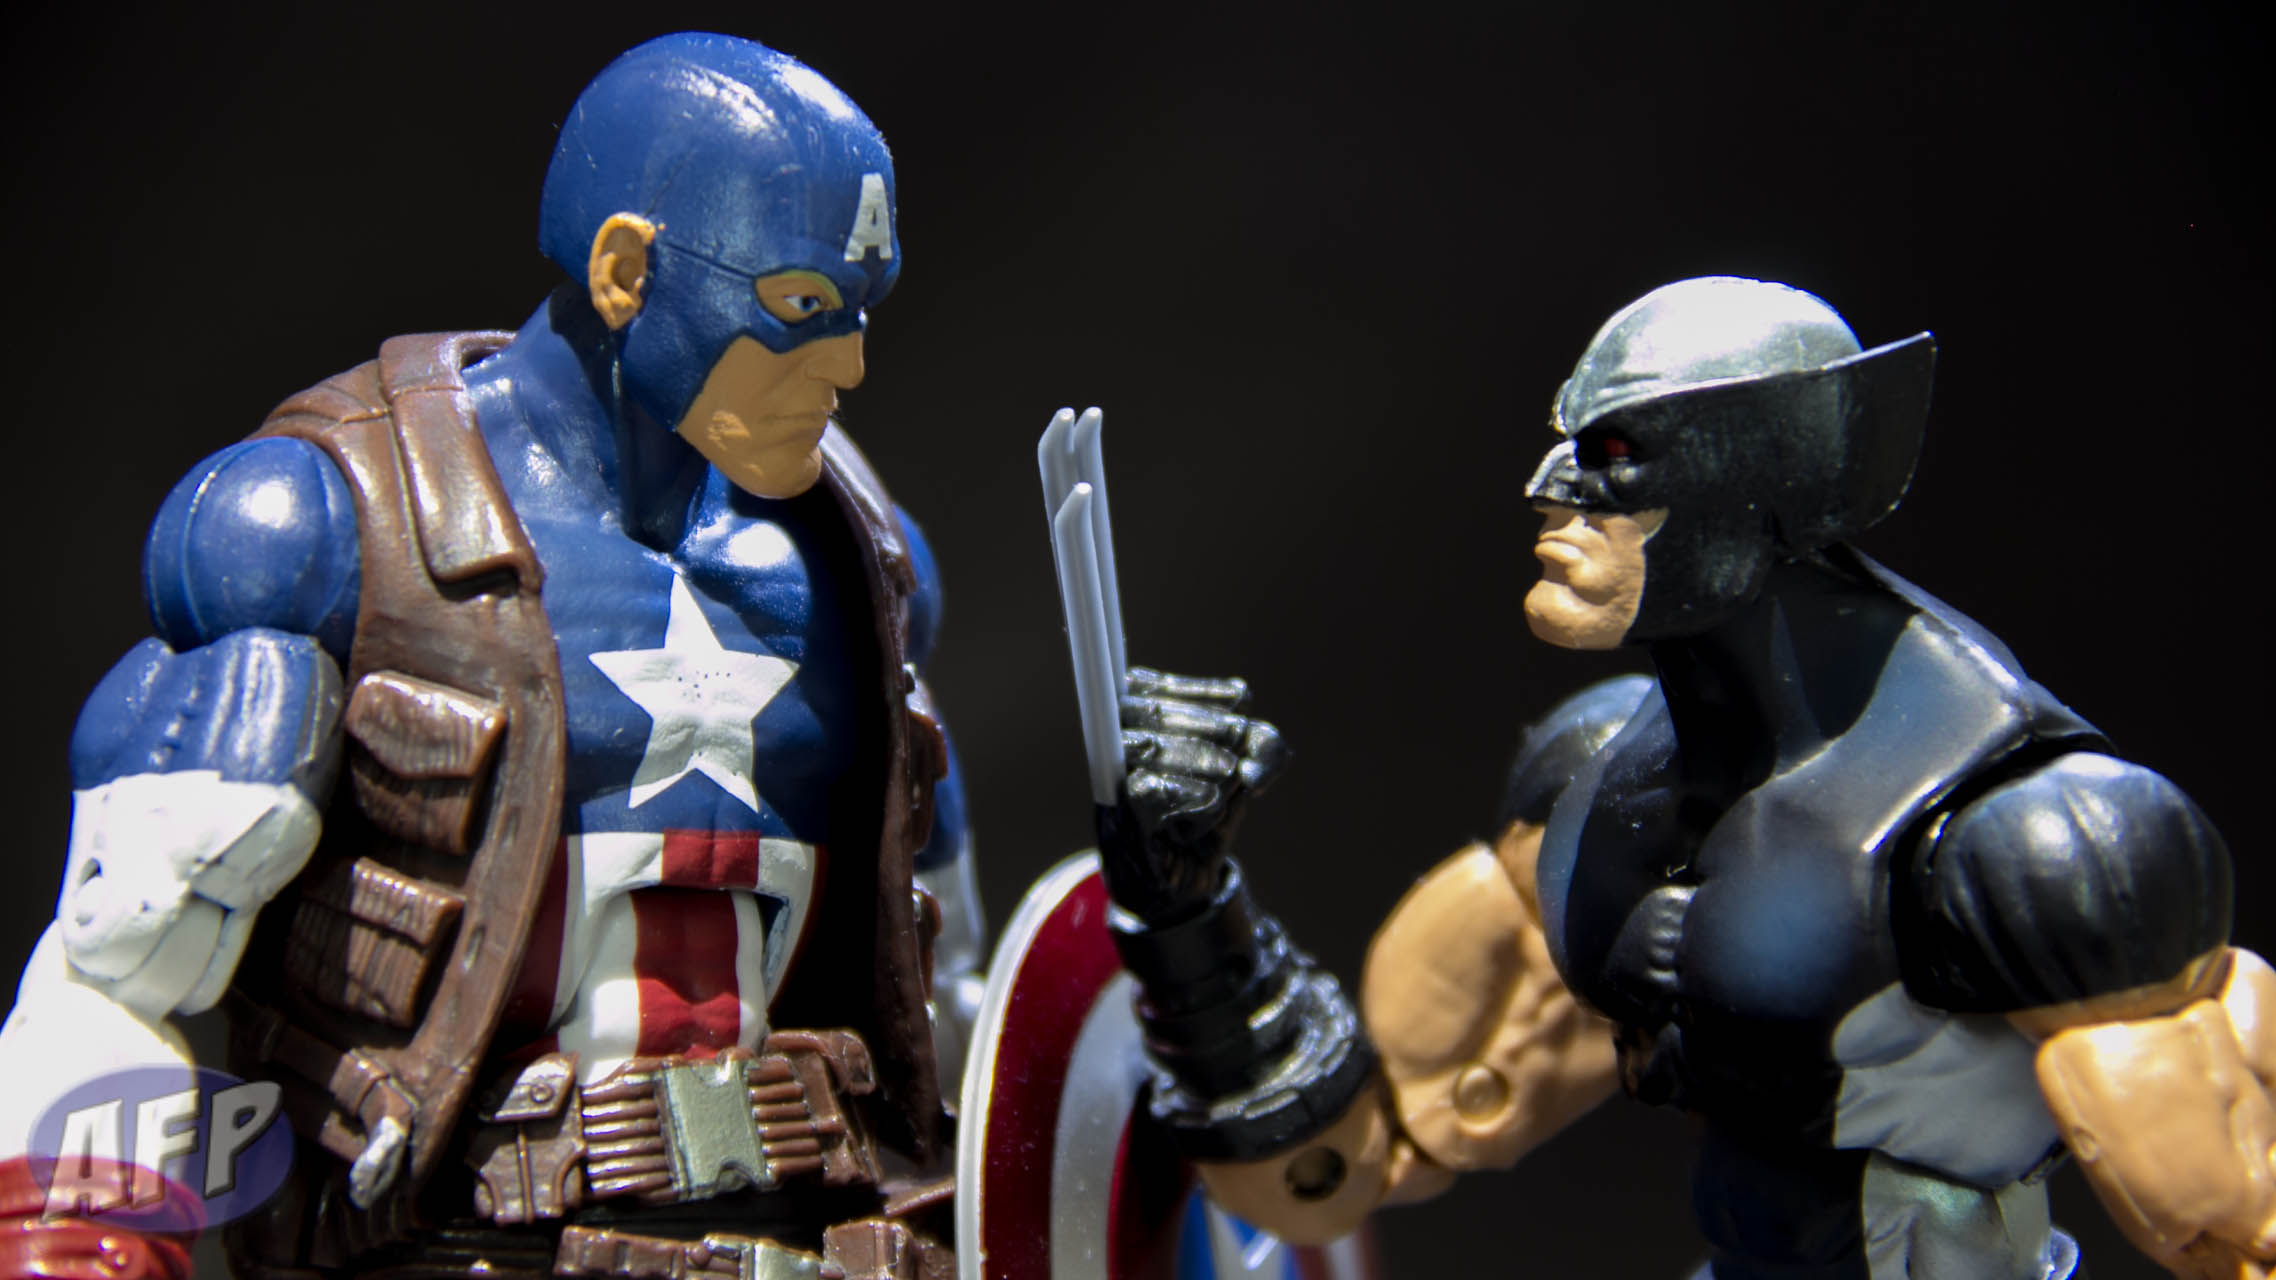 Marvel Legends Series: Ultimate Captain America Figure